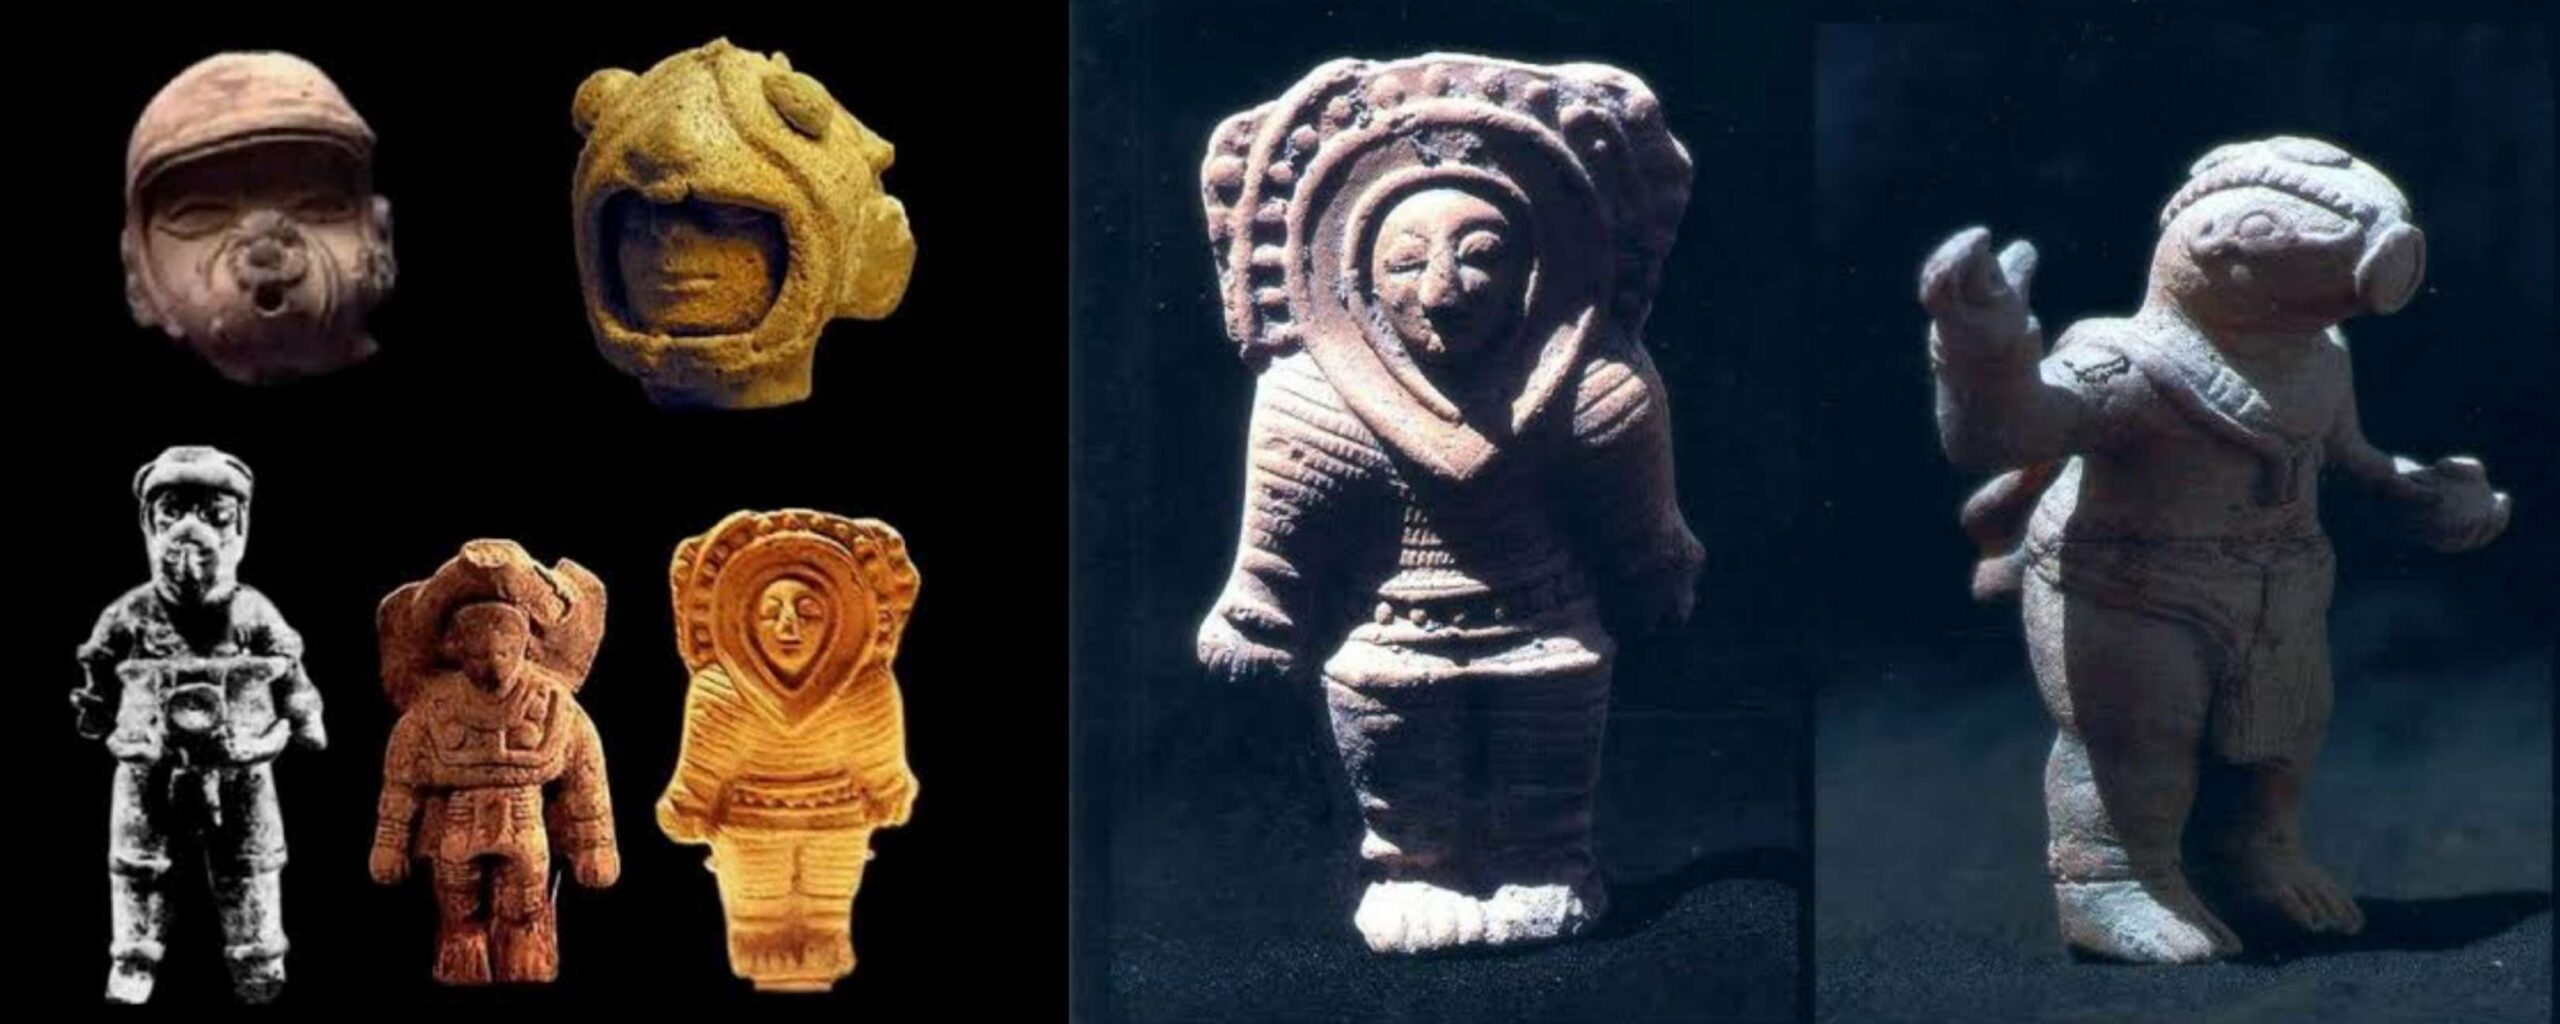 Mayalar eski astronotlar tarafından ziyaret edildi mi? 3